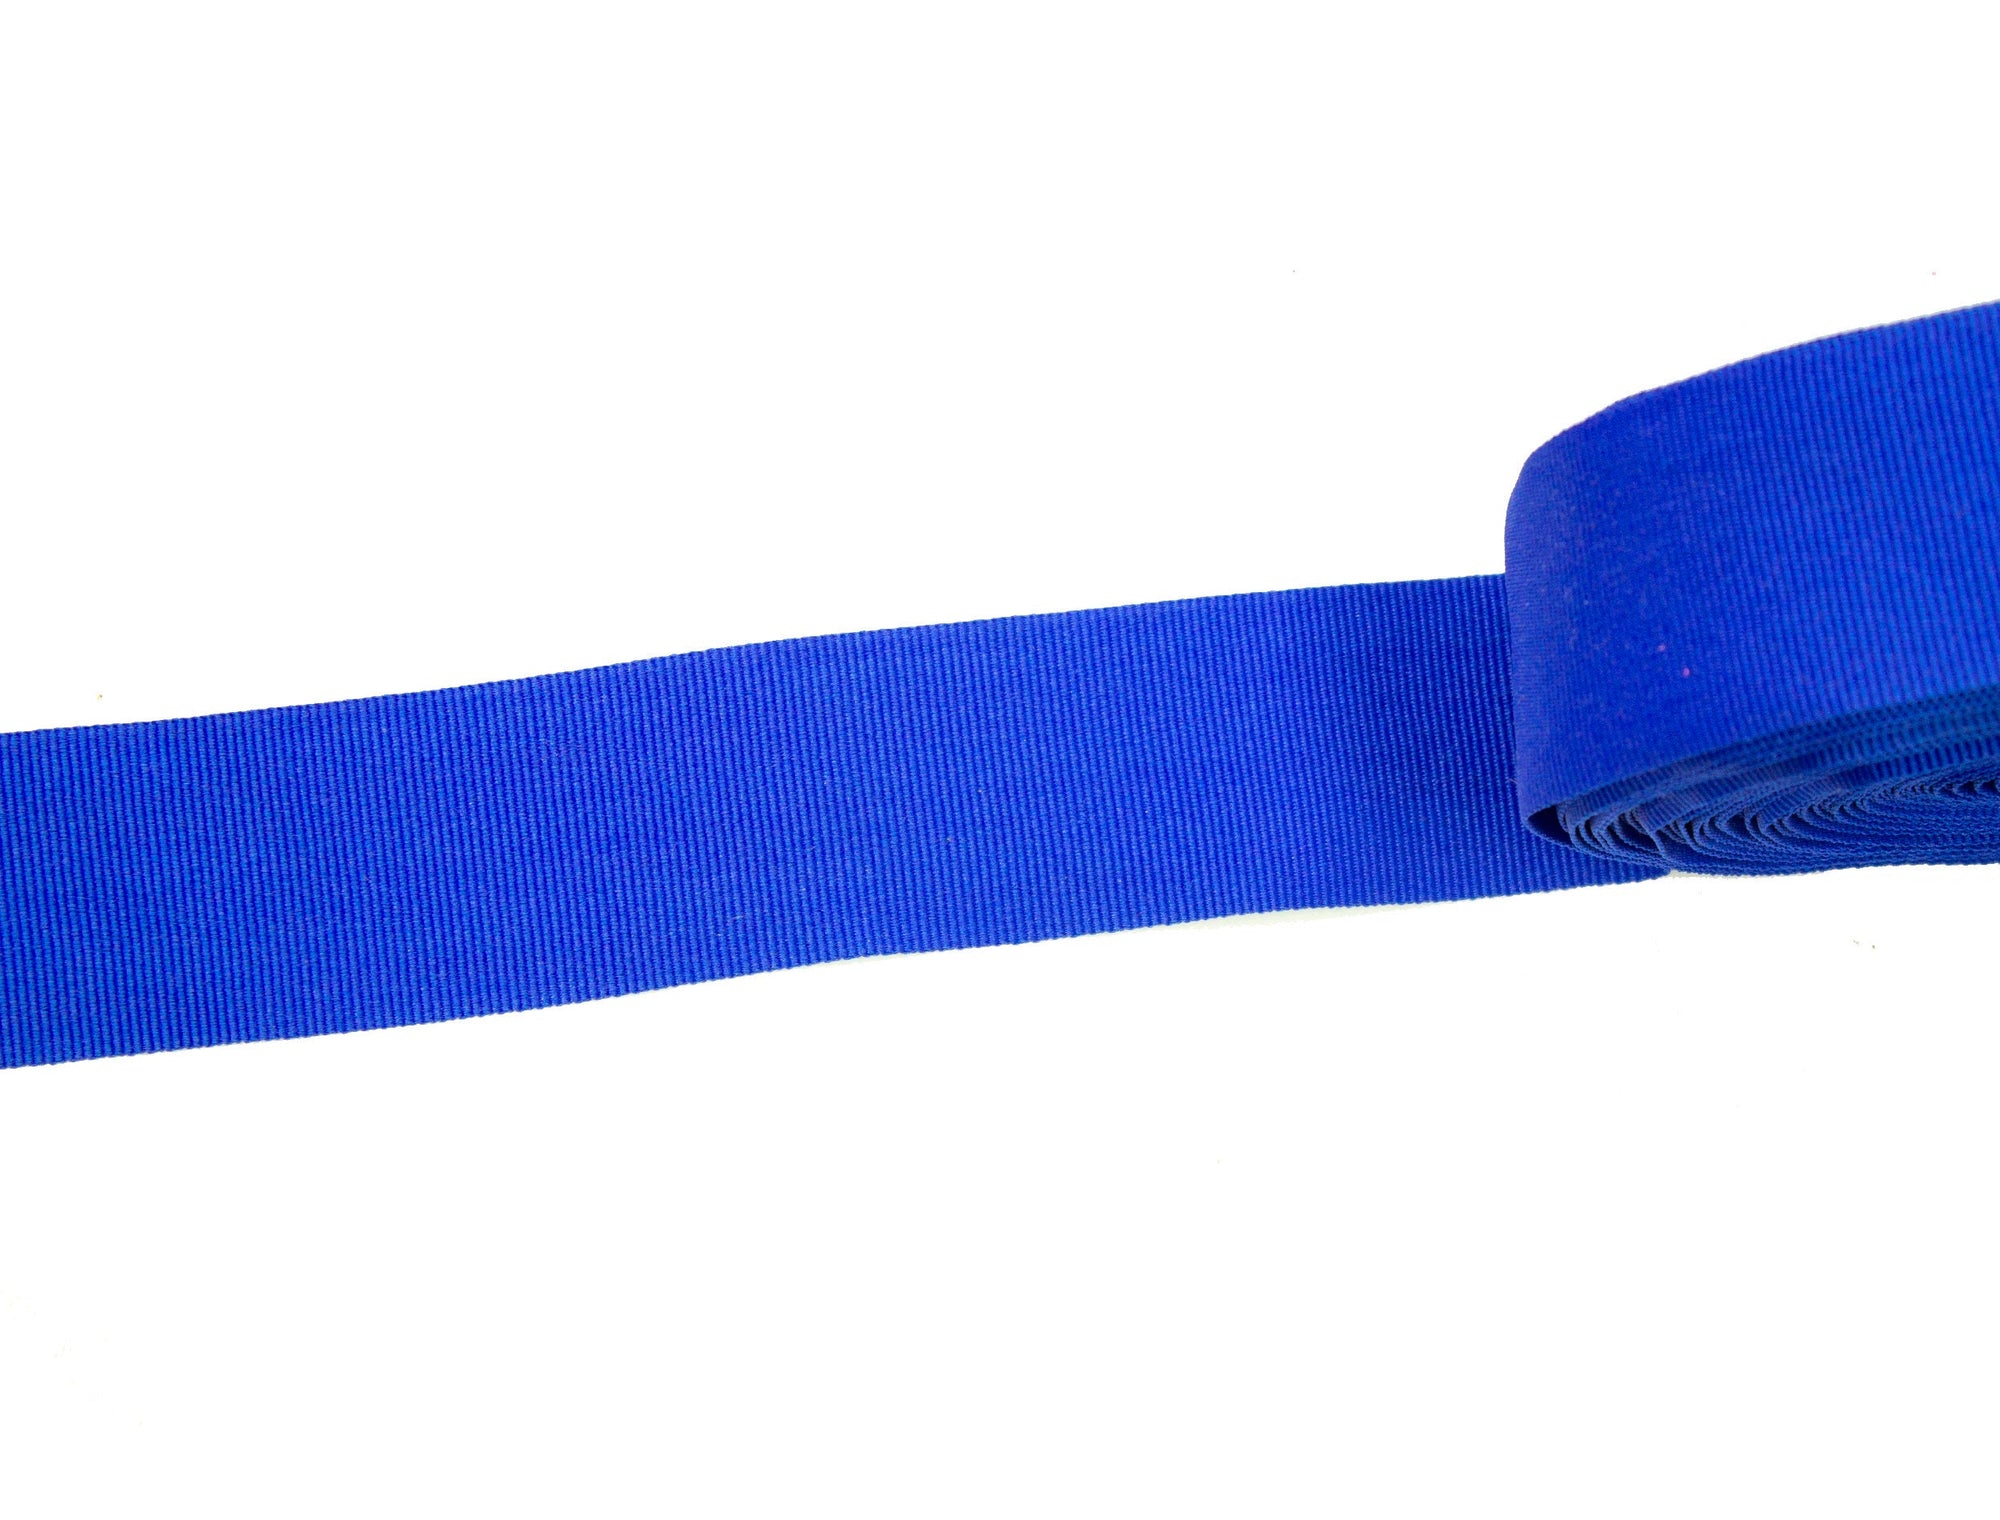 Vintage Grosgrain Ribbon Royal Blue Measures 38 mm Wide - Sold by the Yard